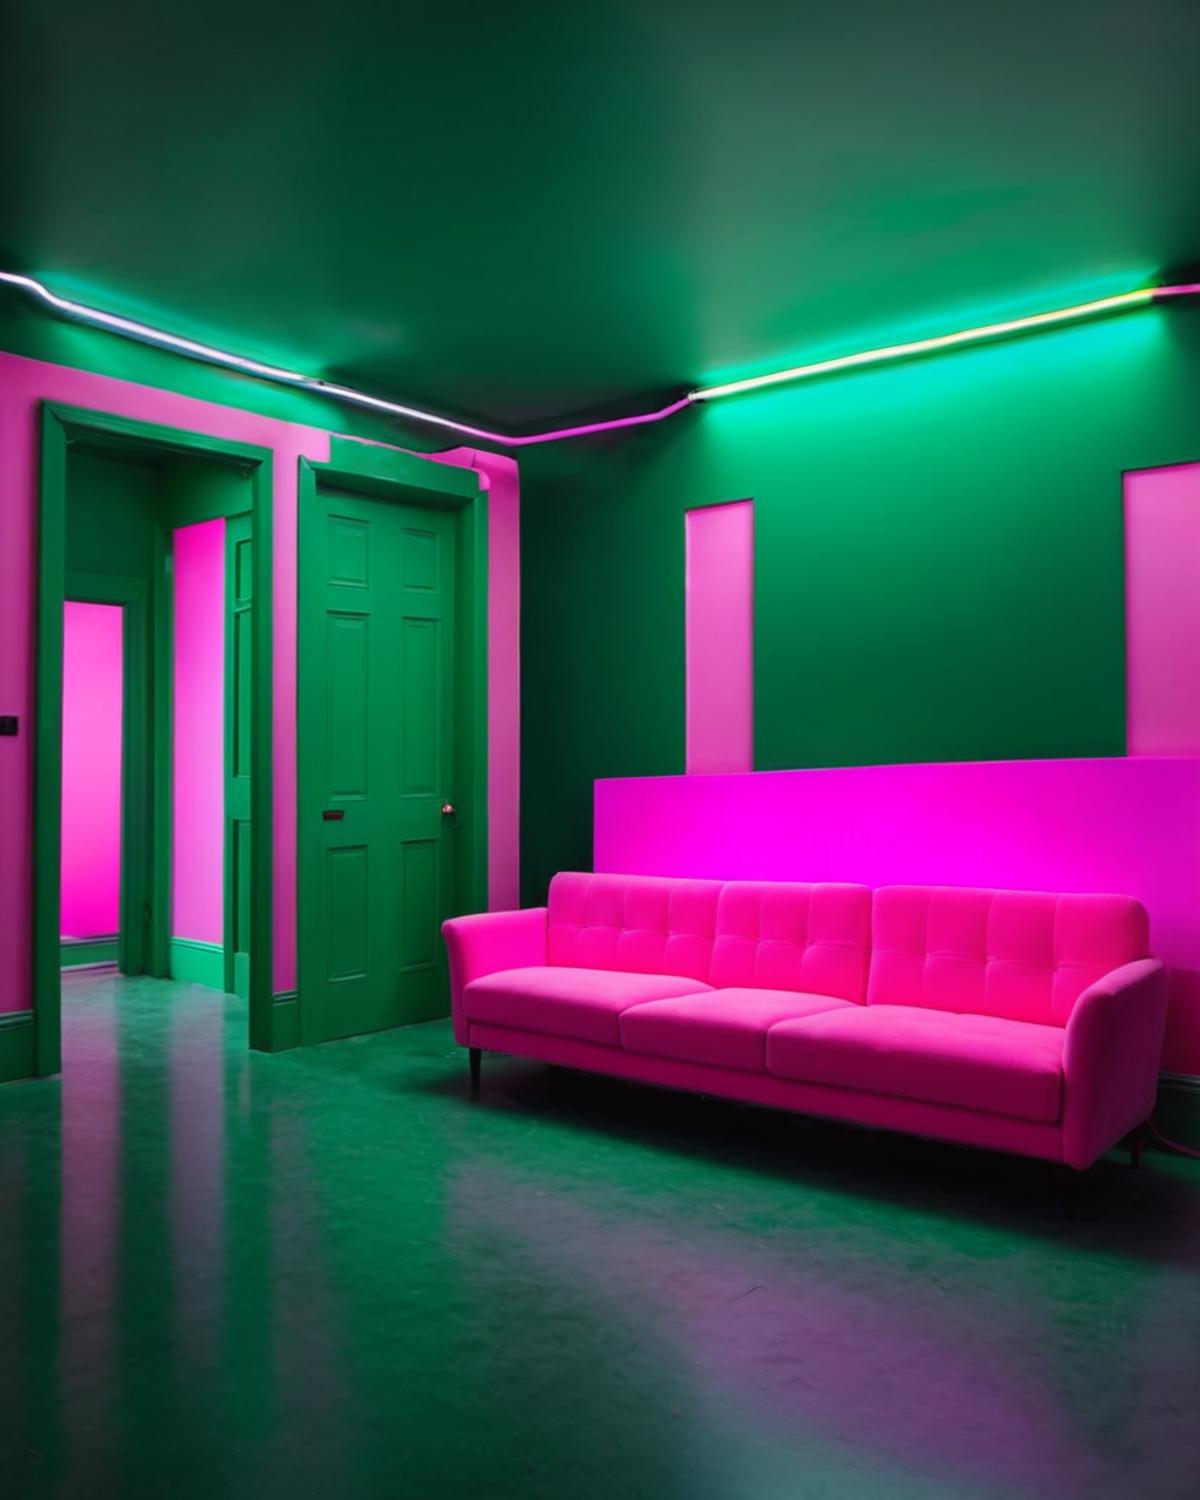 Neon Environments image by Ciro_Negrogni